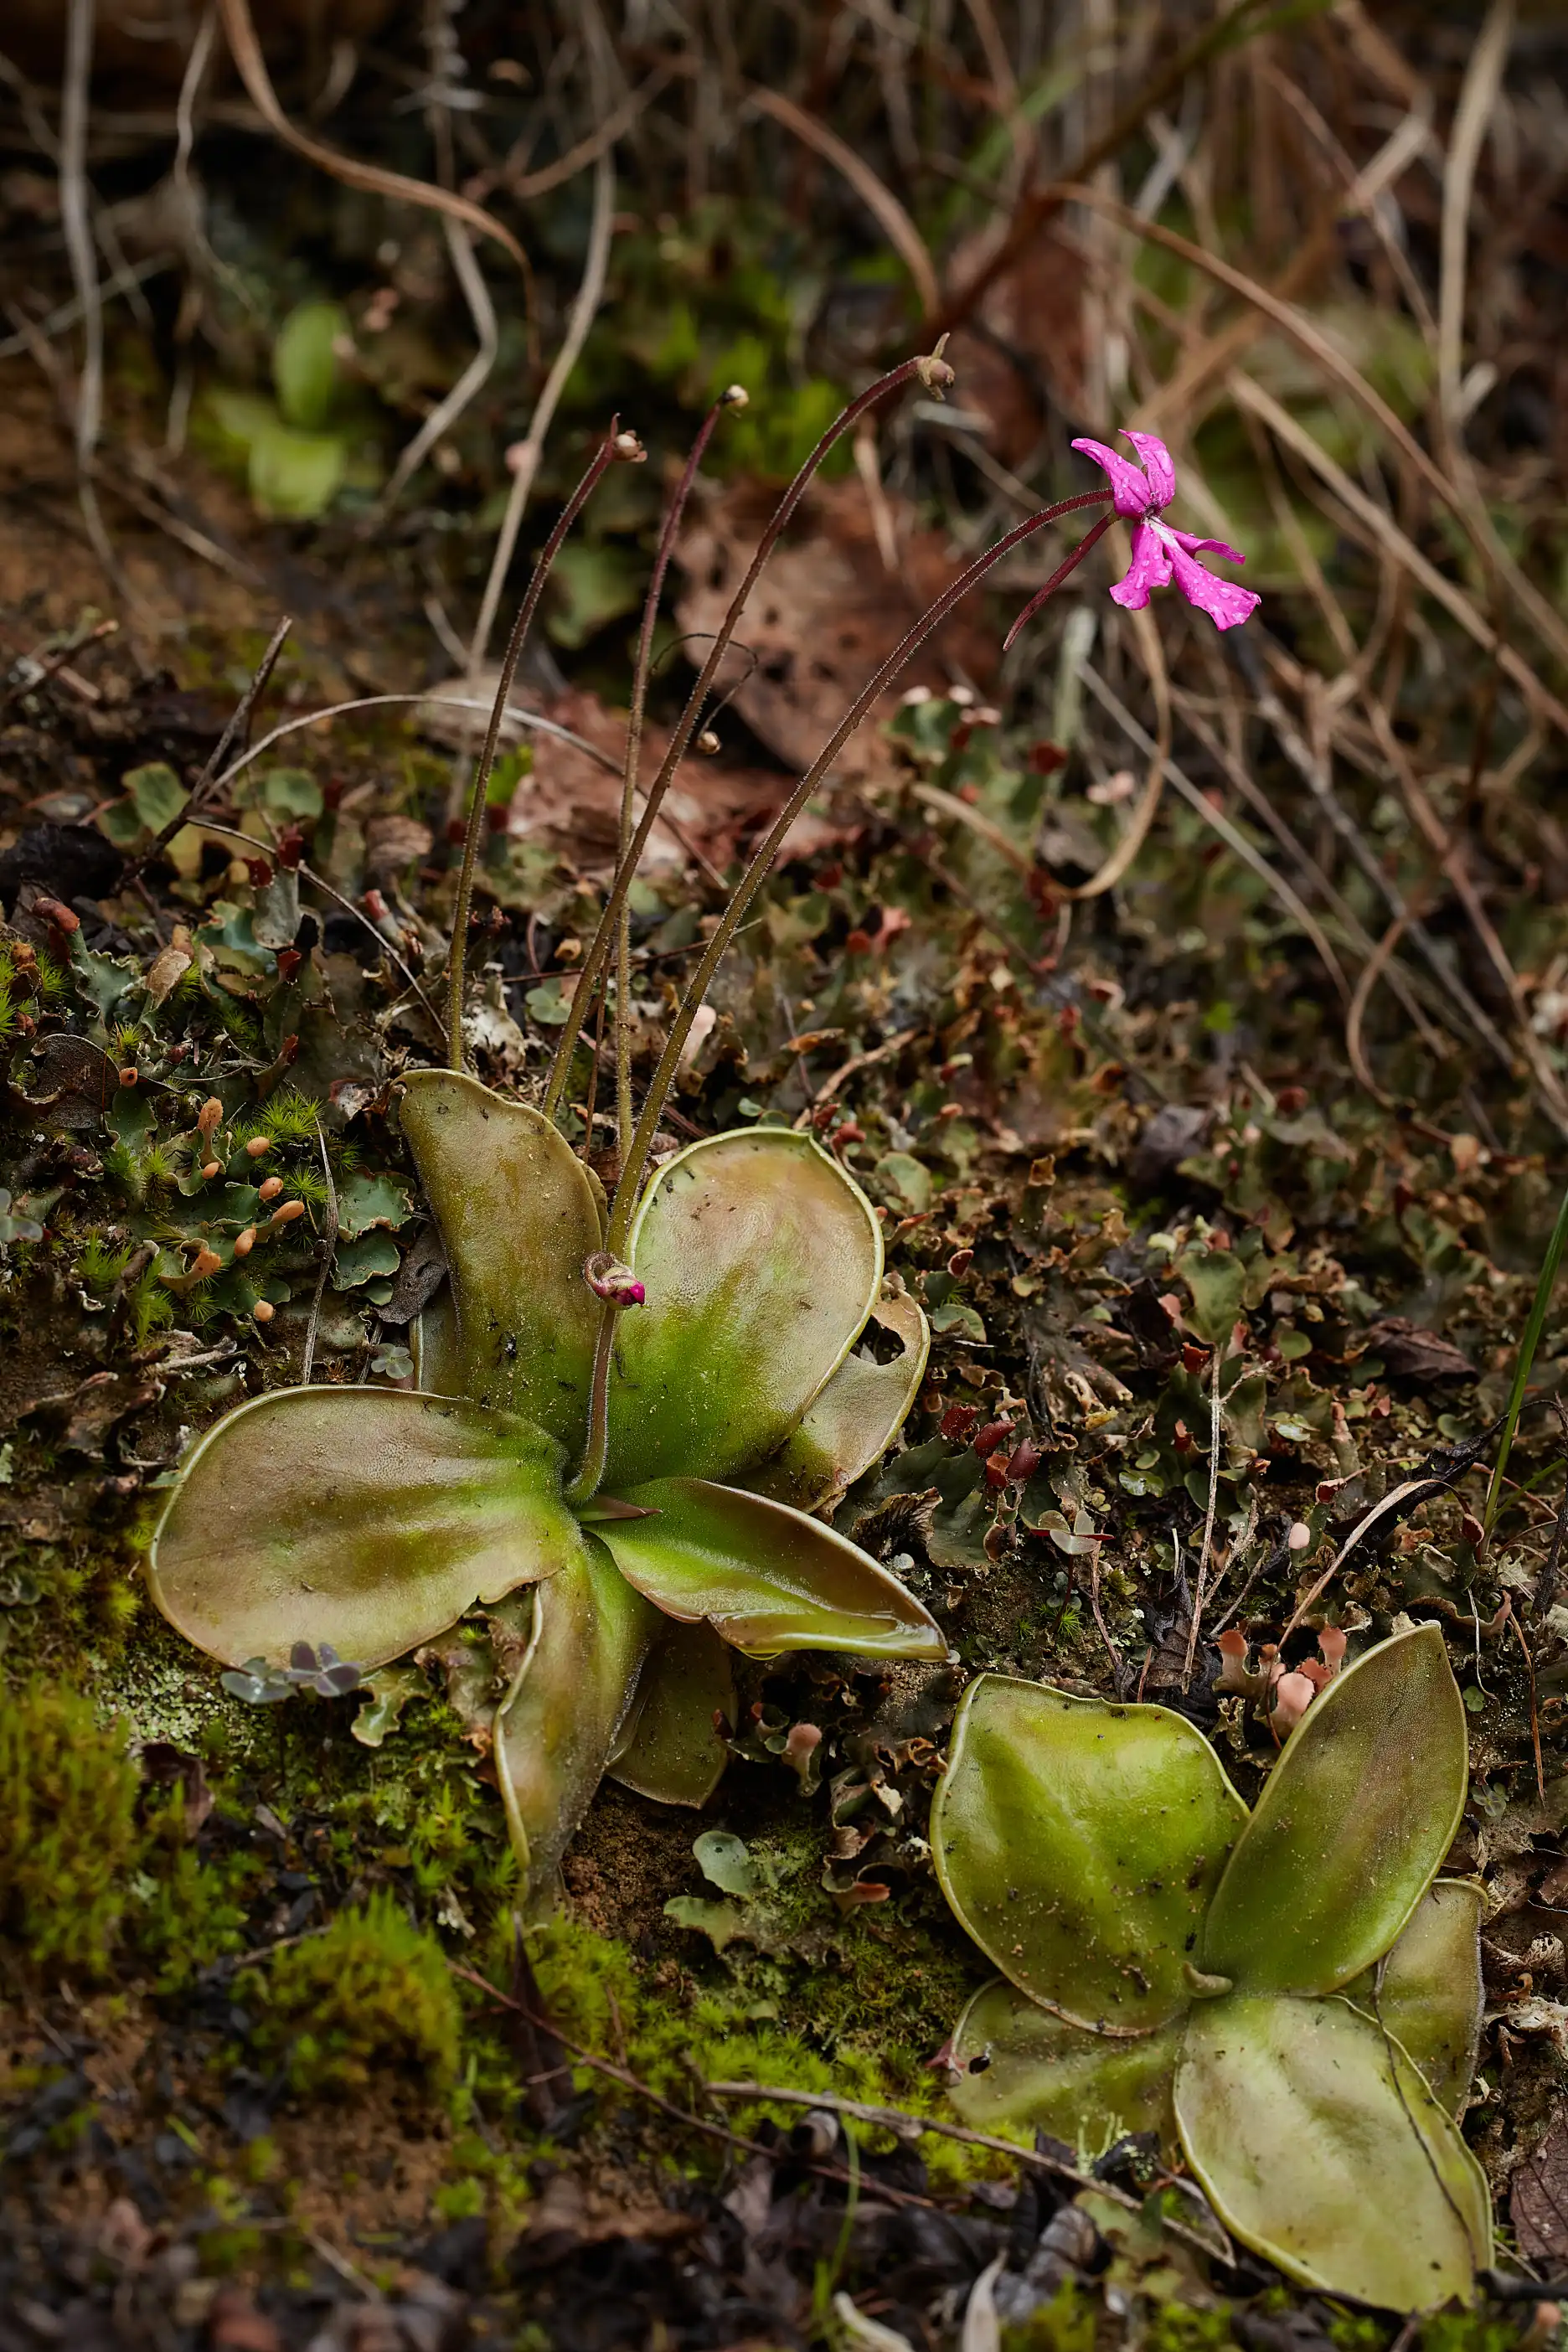 Pinguicula moranensis plants.